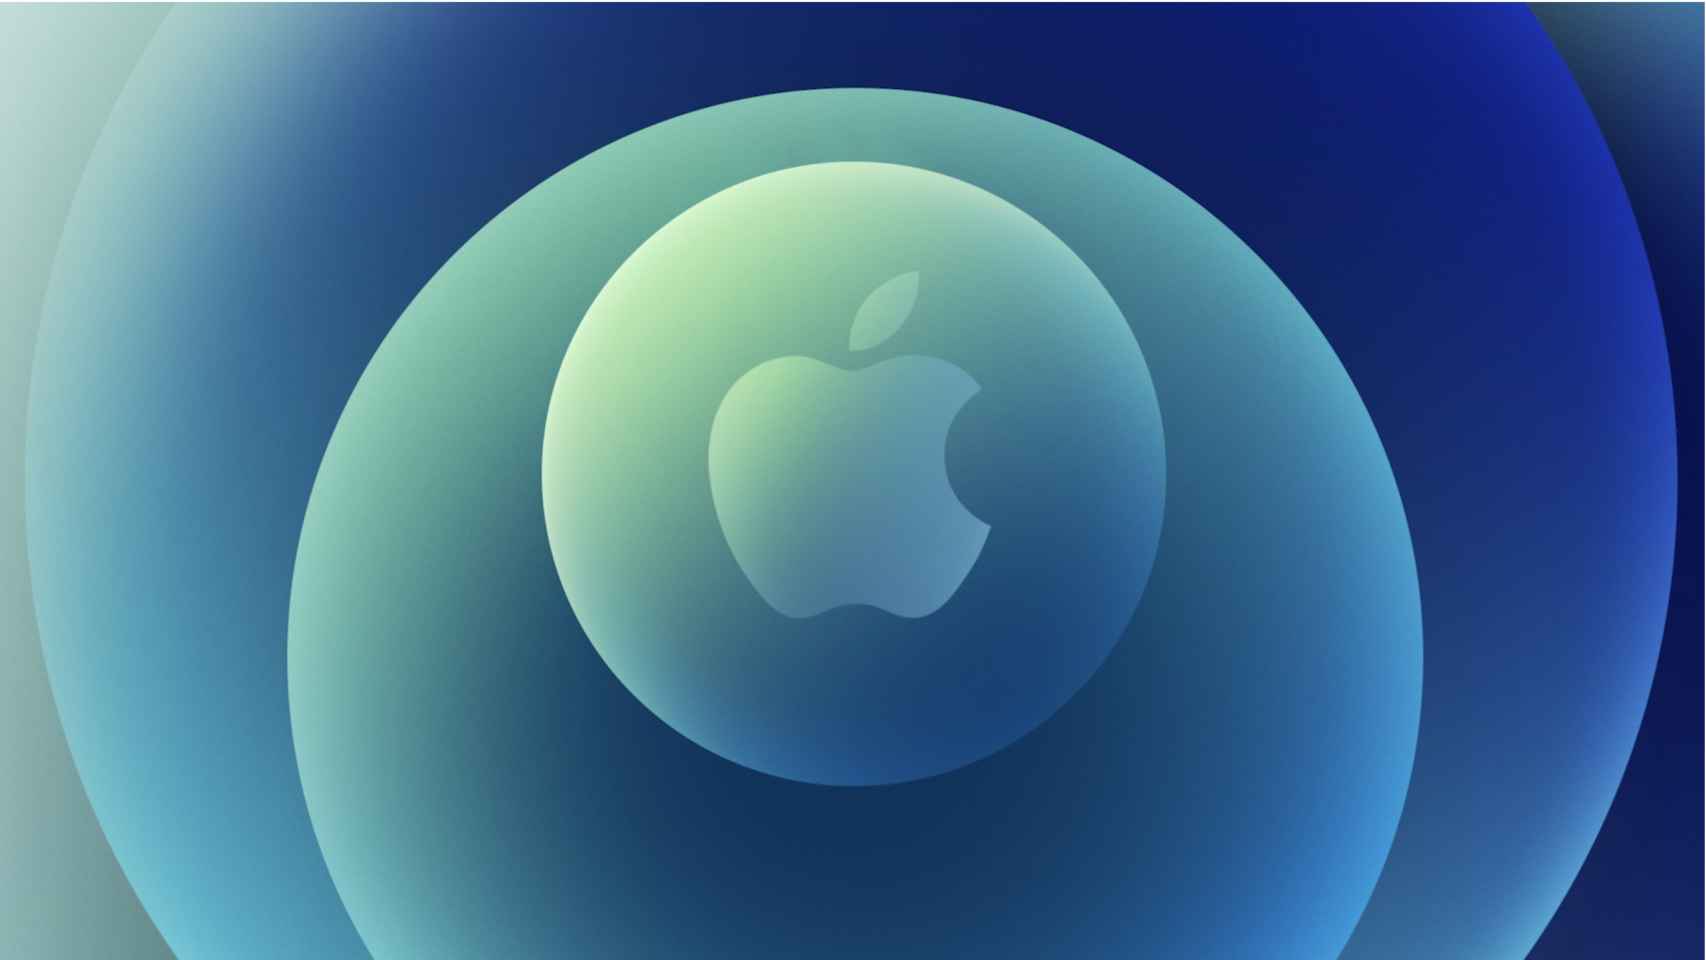 Logo Keynote Apple 2020